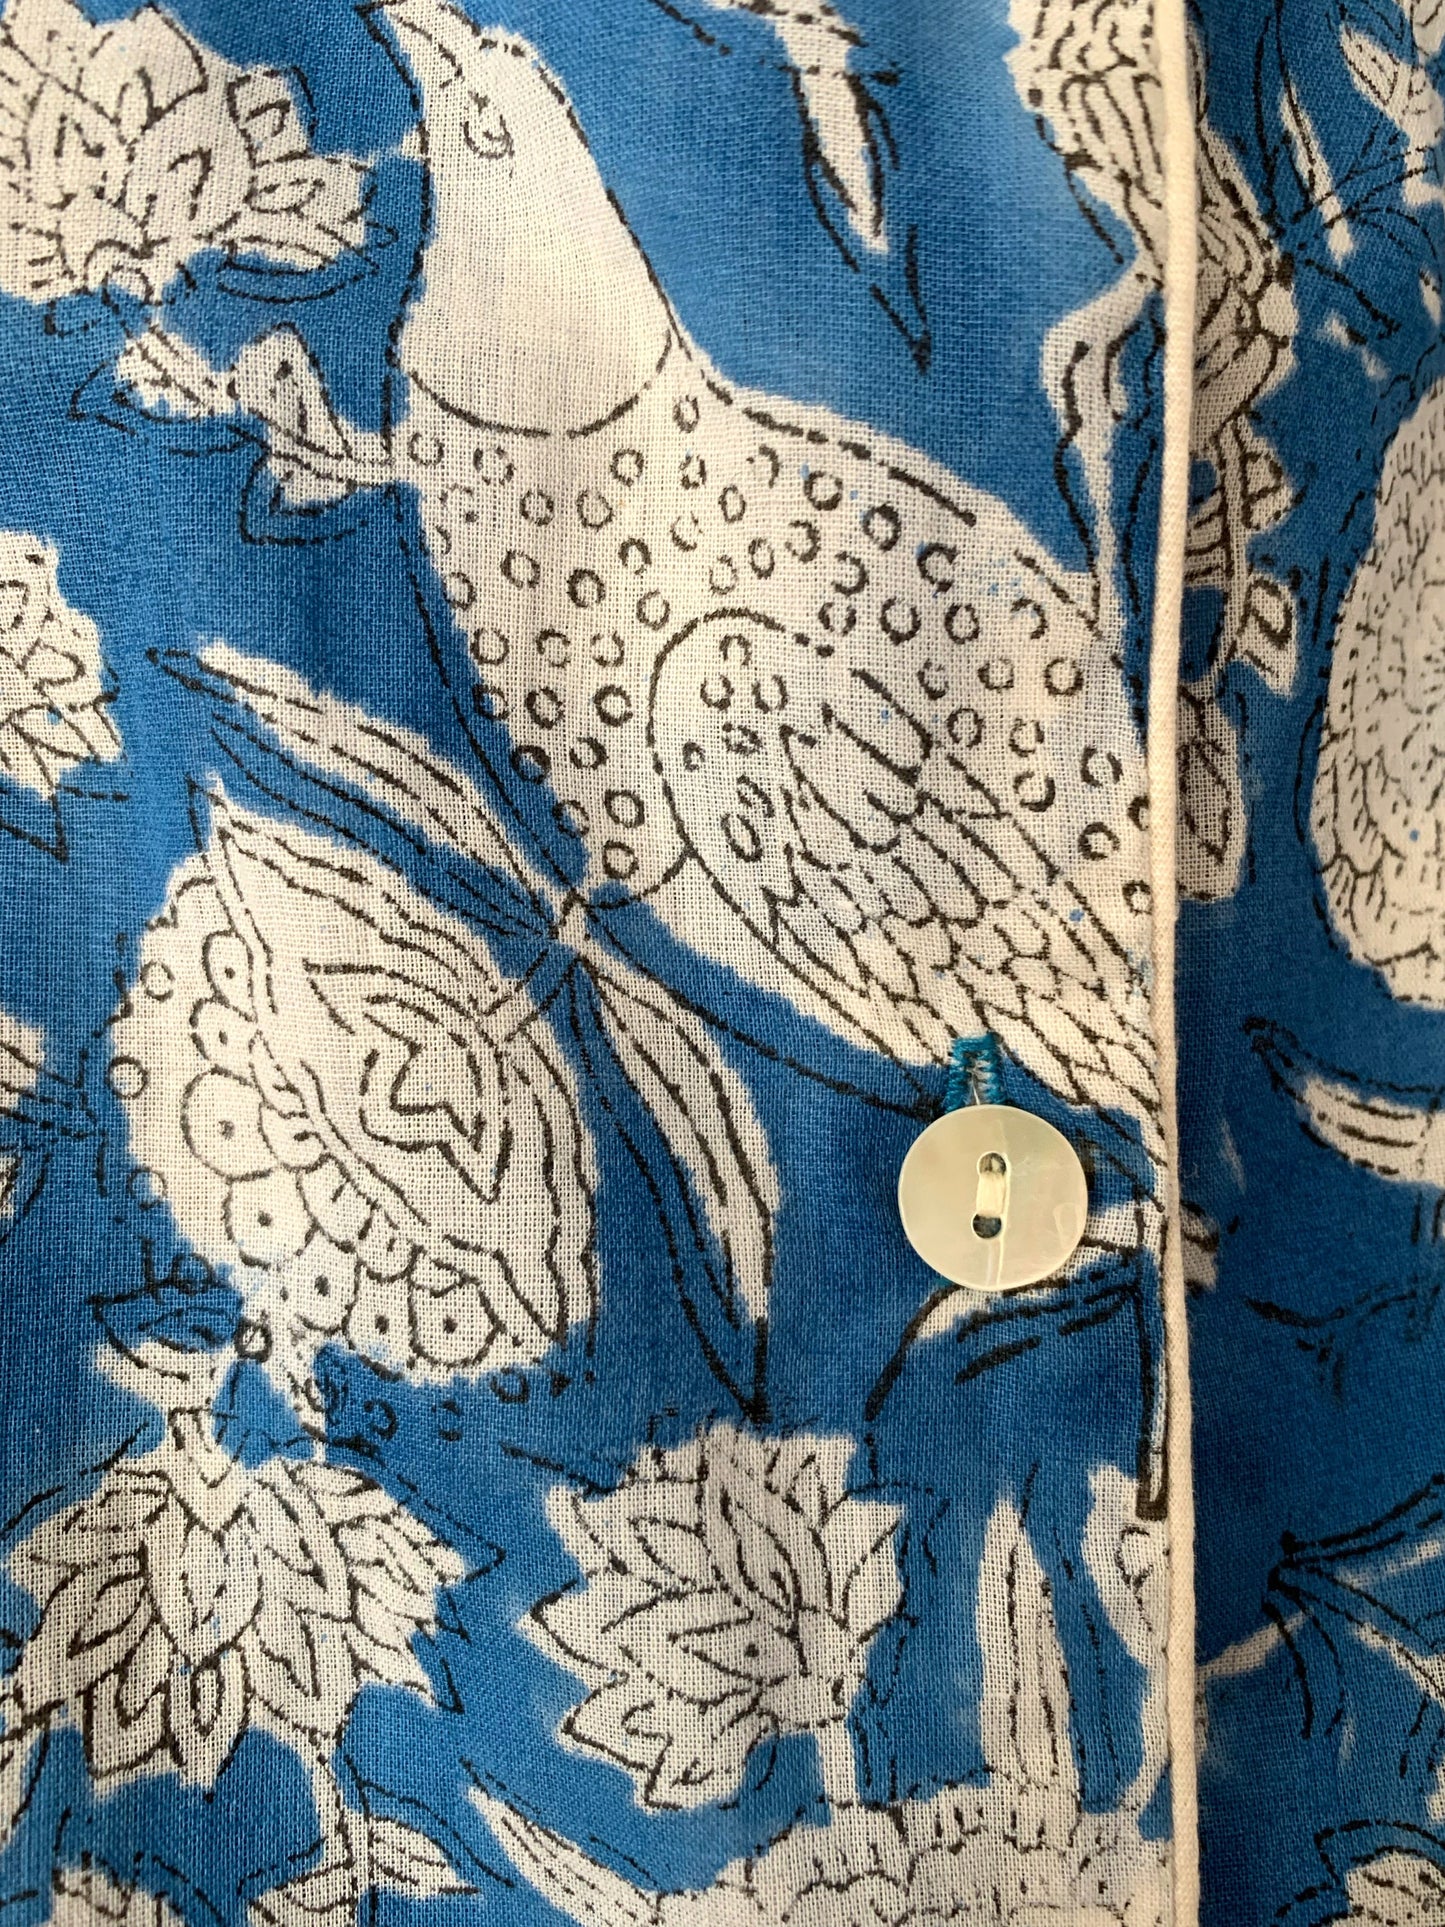 Camisón · Algodón puro estampado block print artesanal en India · Camisa para dormir algodón 100% · Camisón algodón manga larga · Azul